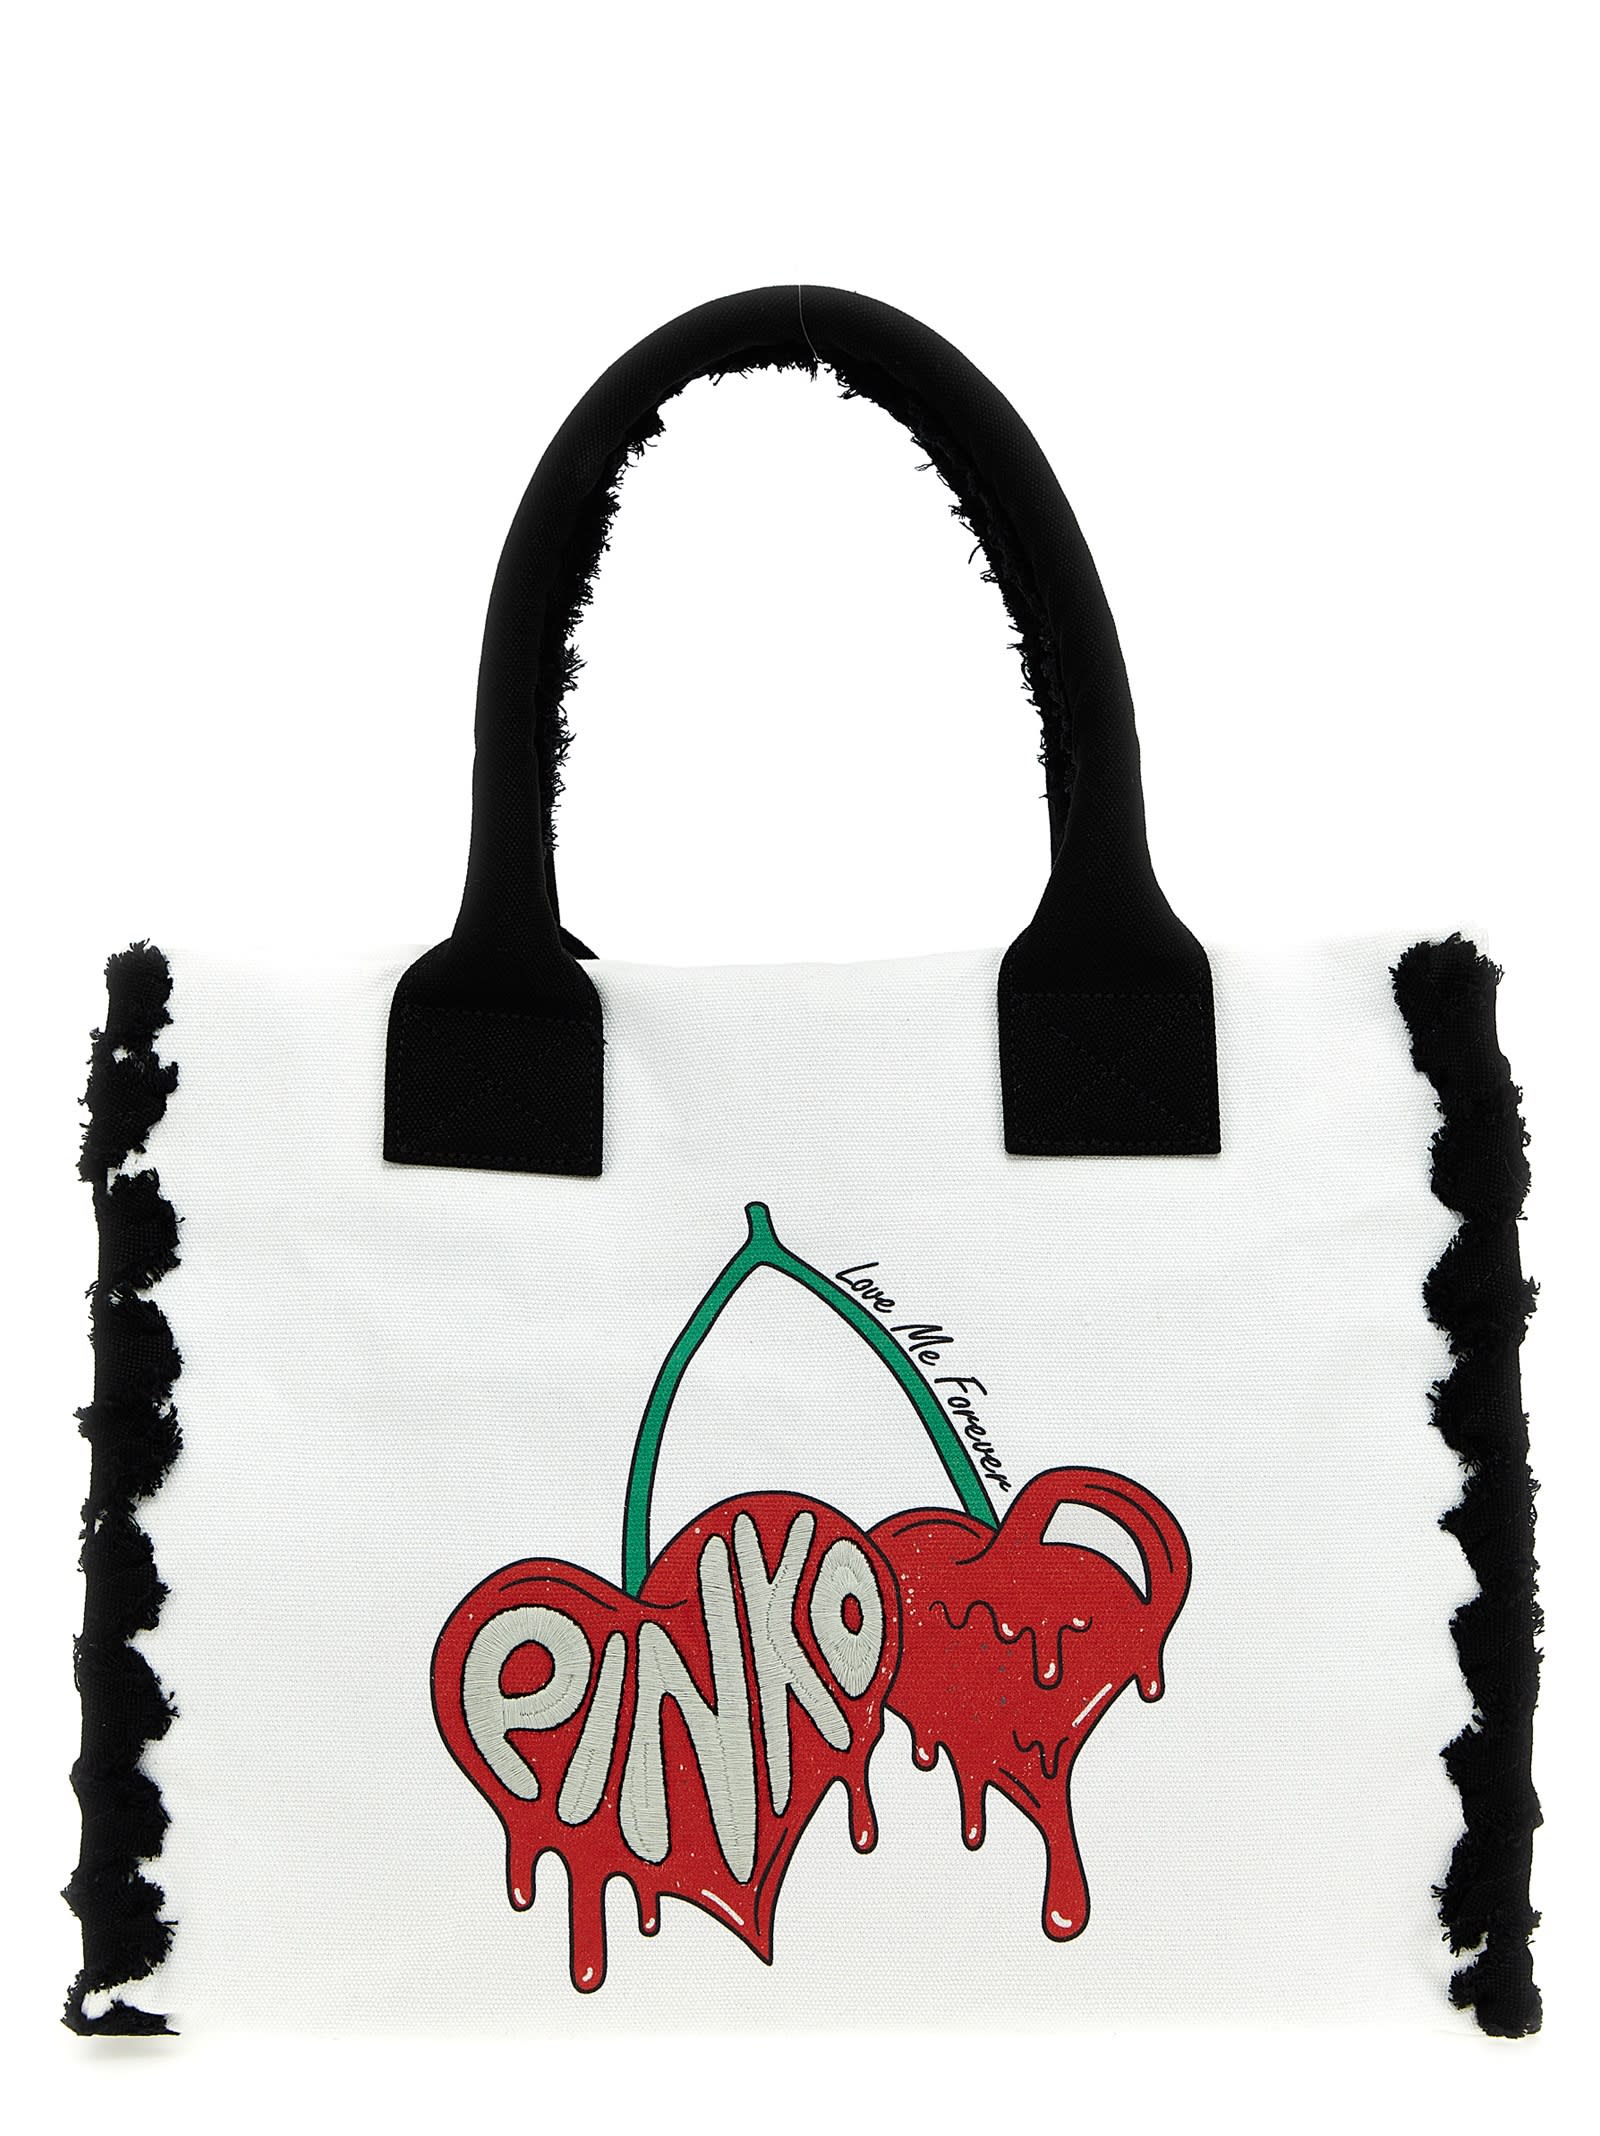 PINKO BEACH SHOPPING BAG